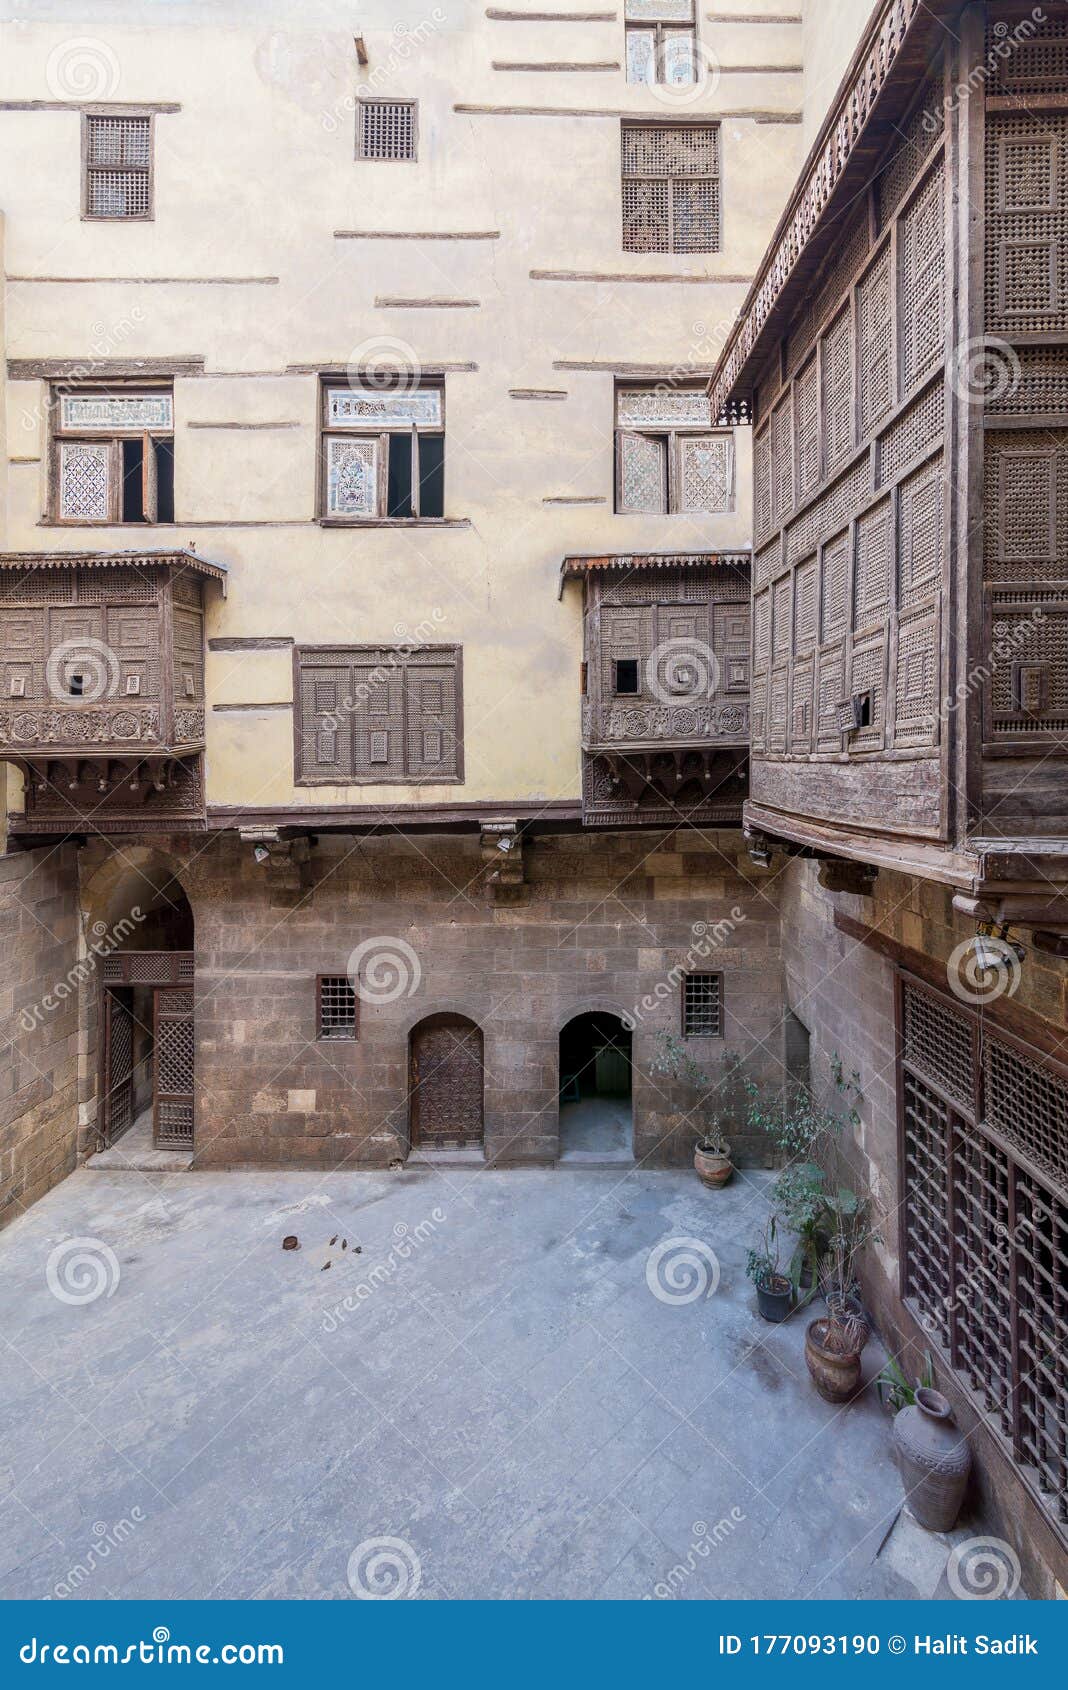 patio of ottoman historic house of zeinab khatoun with wooden oriel windows